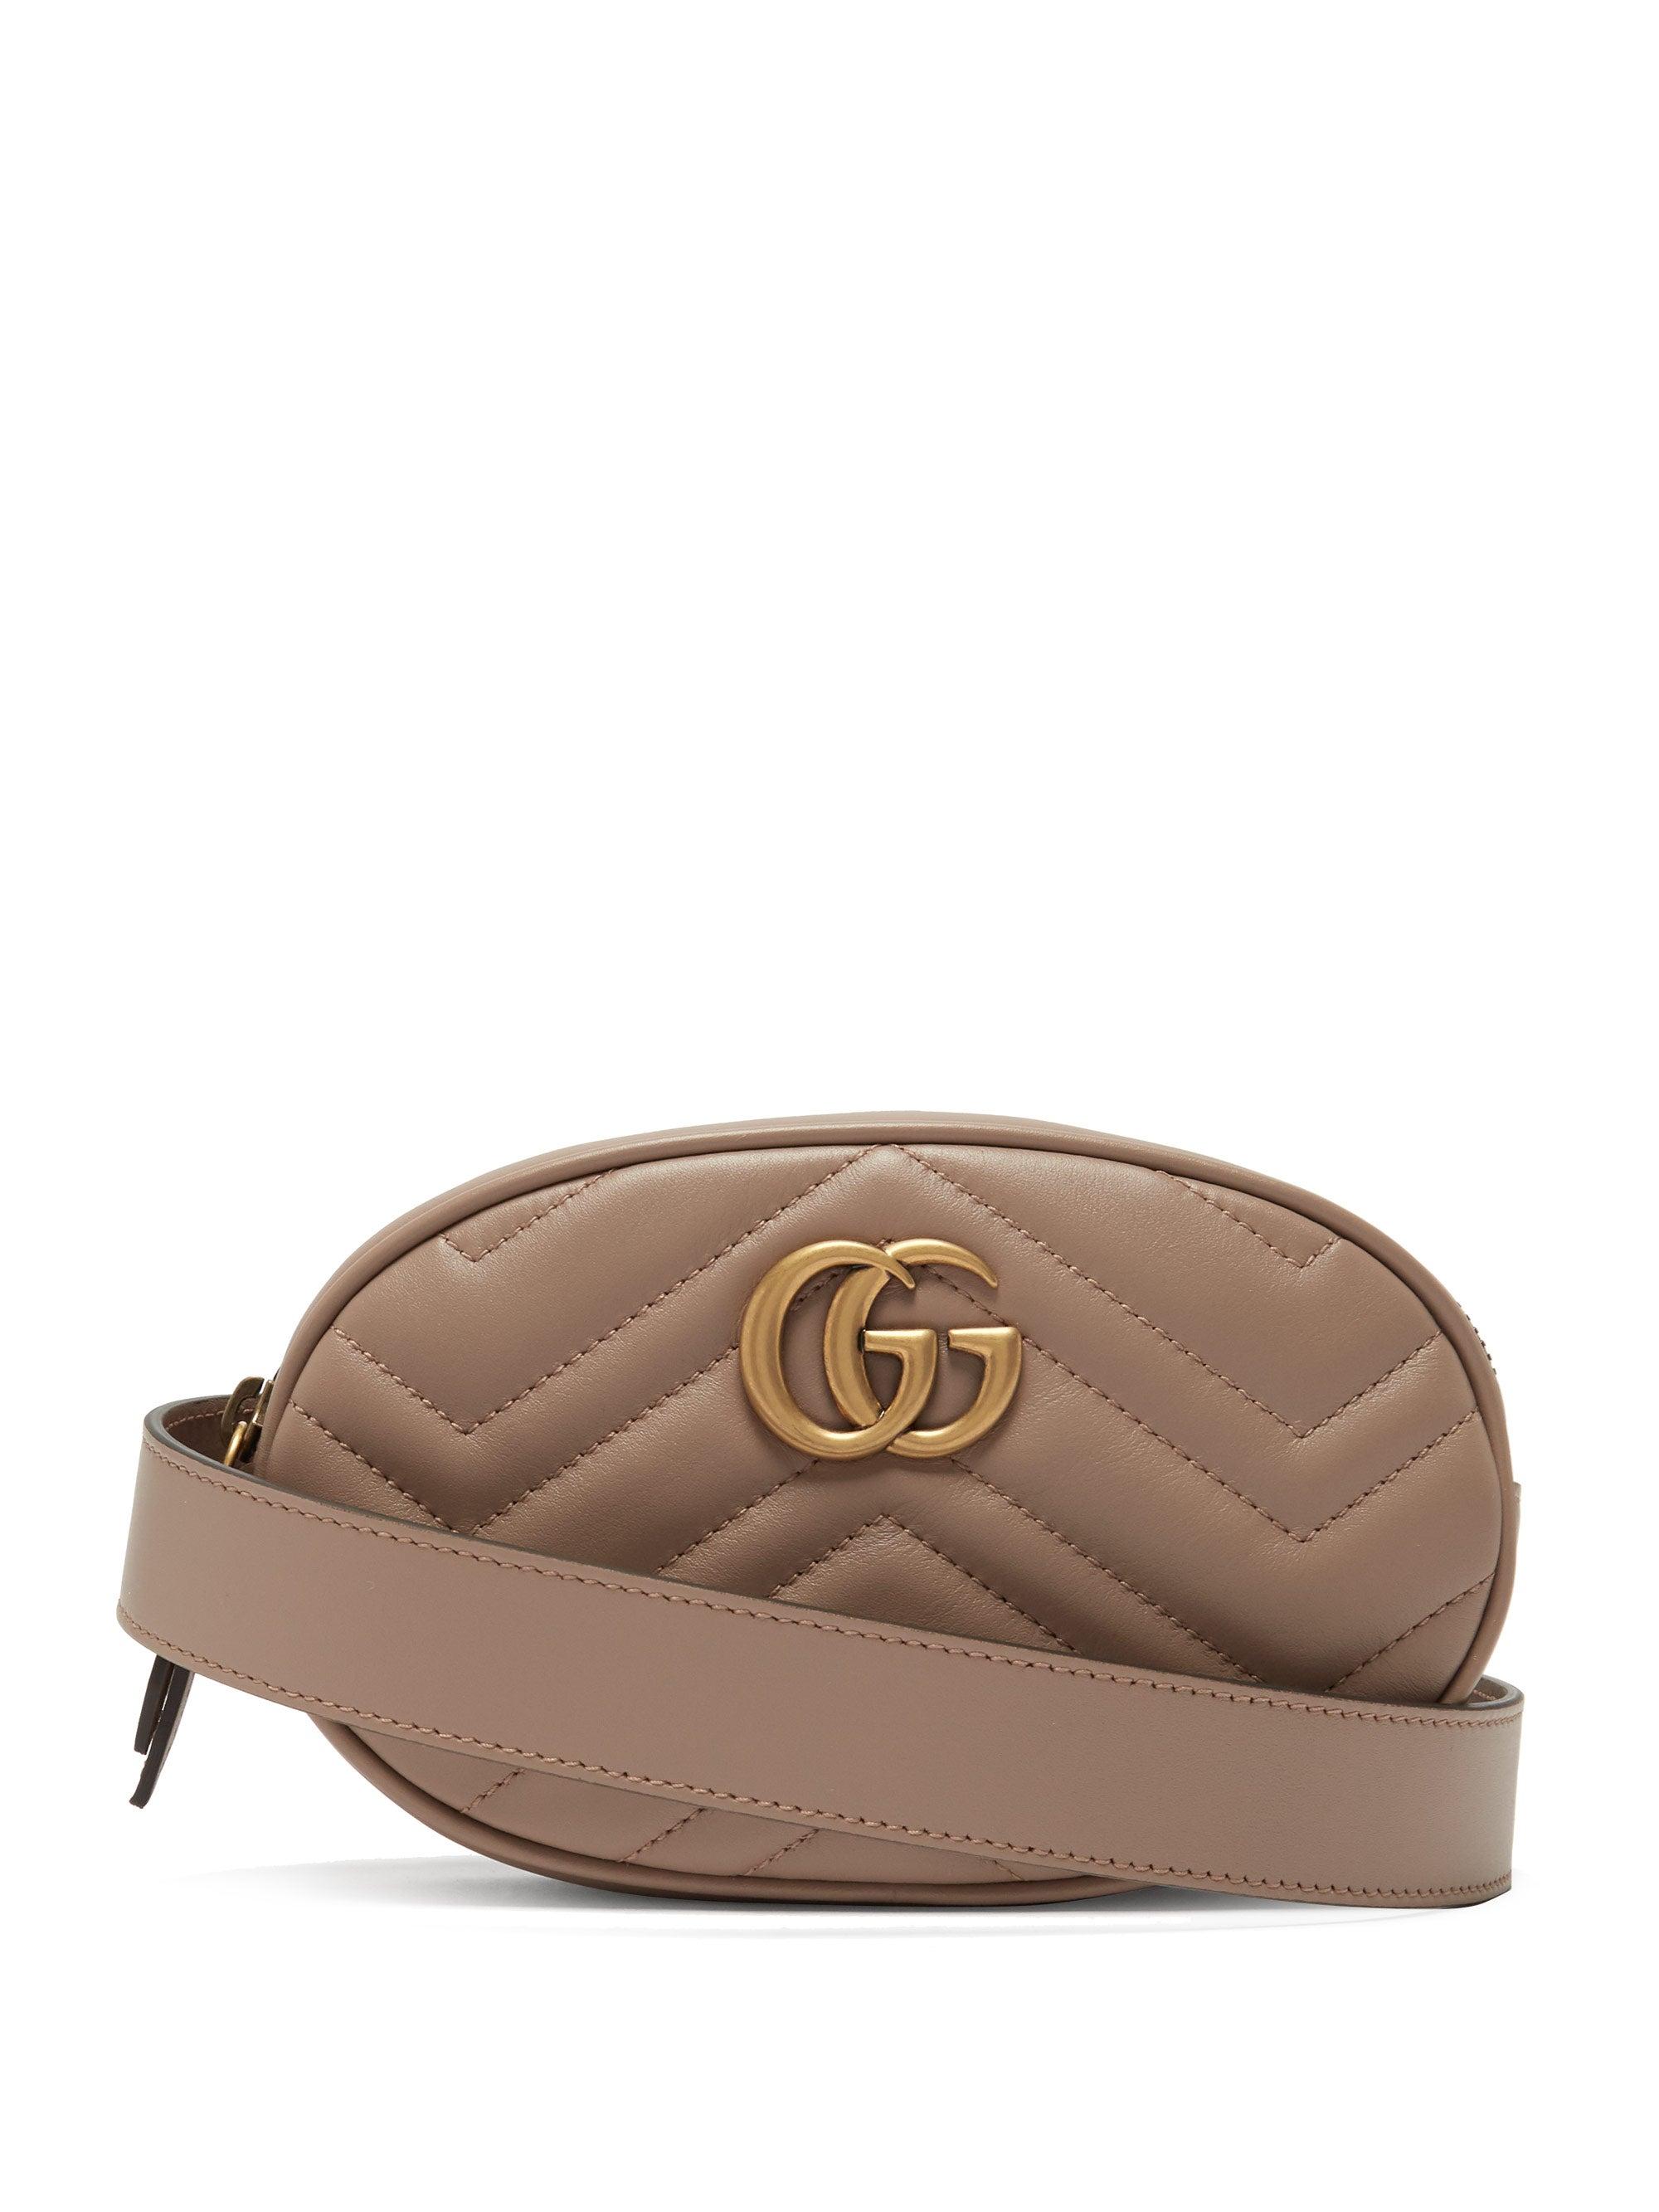 Gucci GG Marmont Belt Bag in Matelasse Chevron Quilted Velvet - Sindur Style